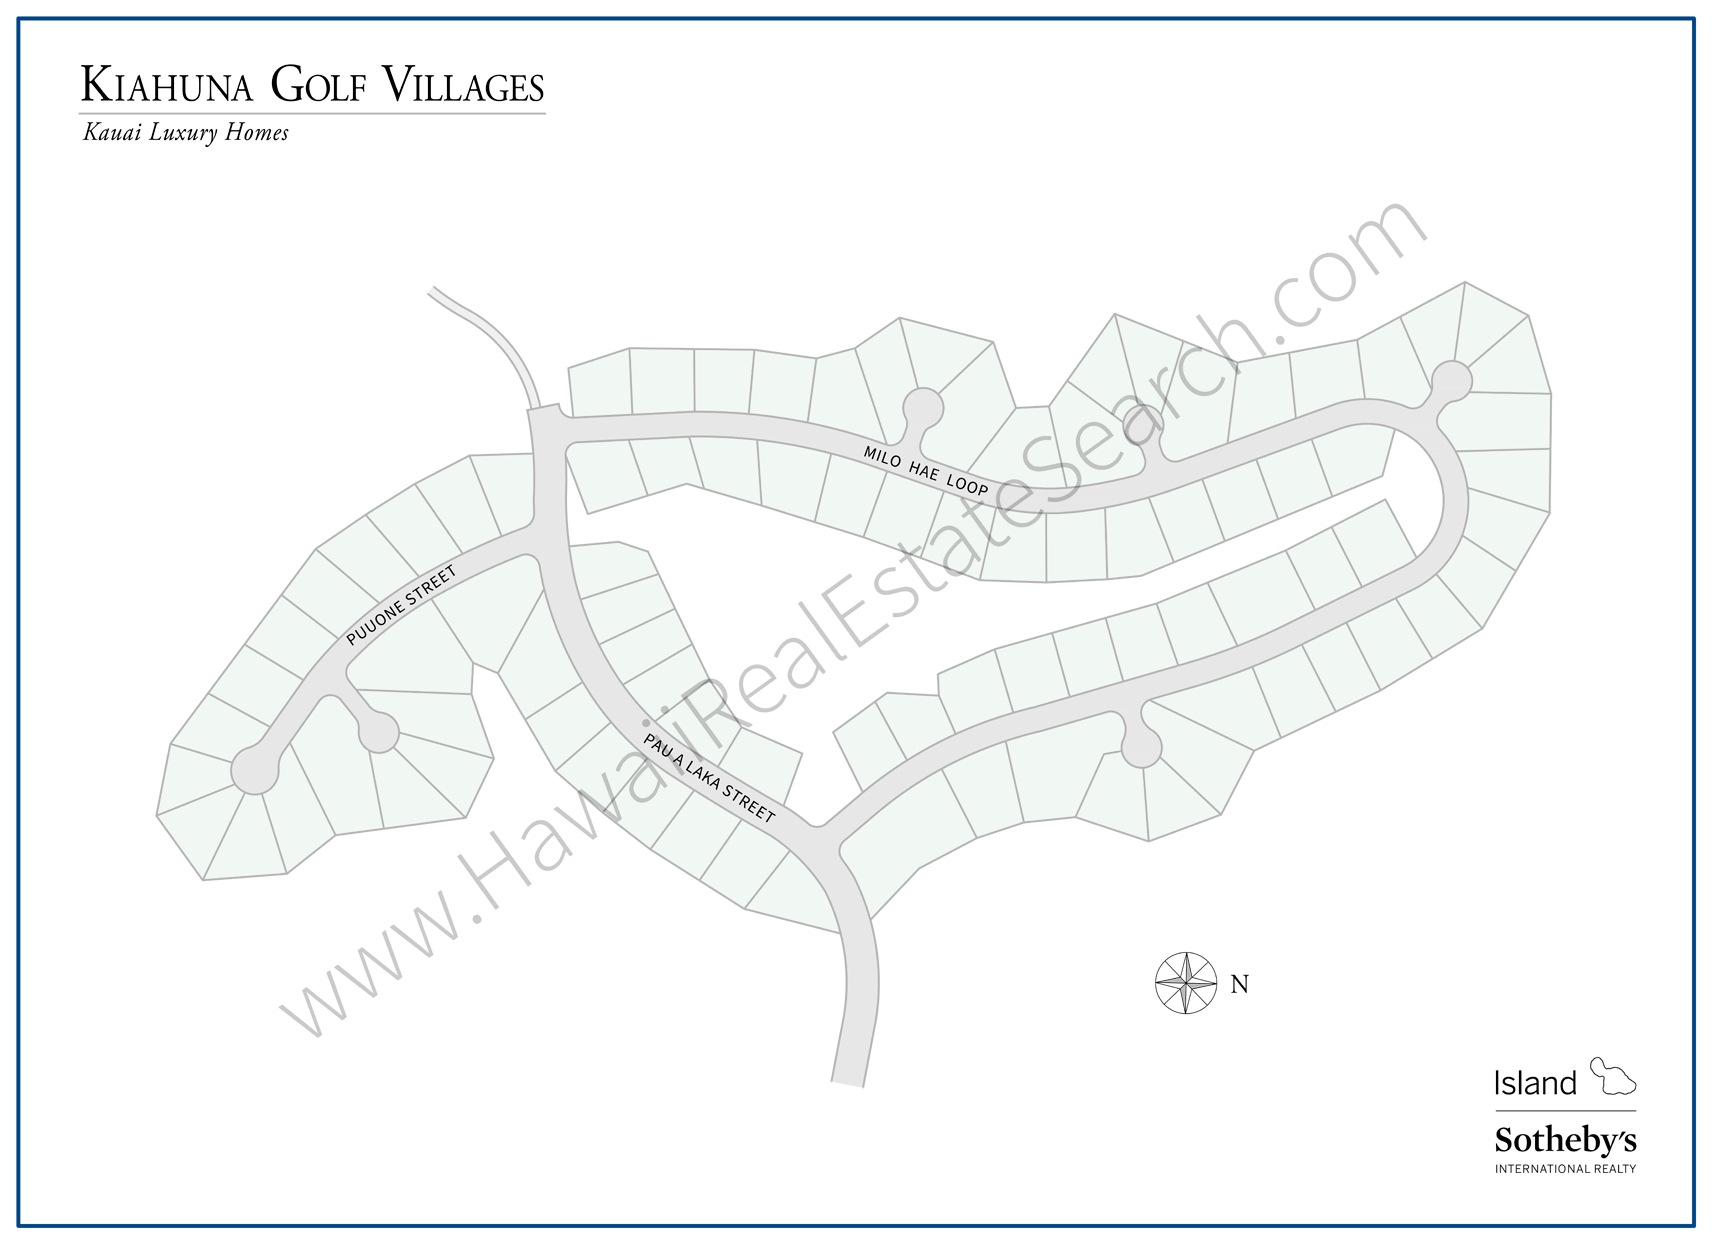 Kiahuna Golf Village Map